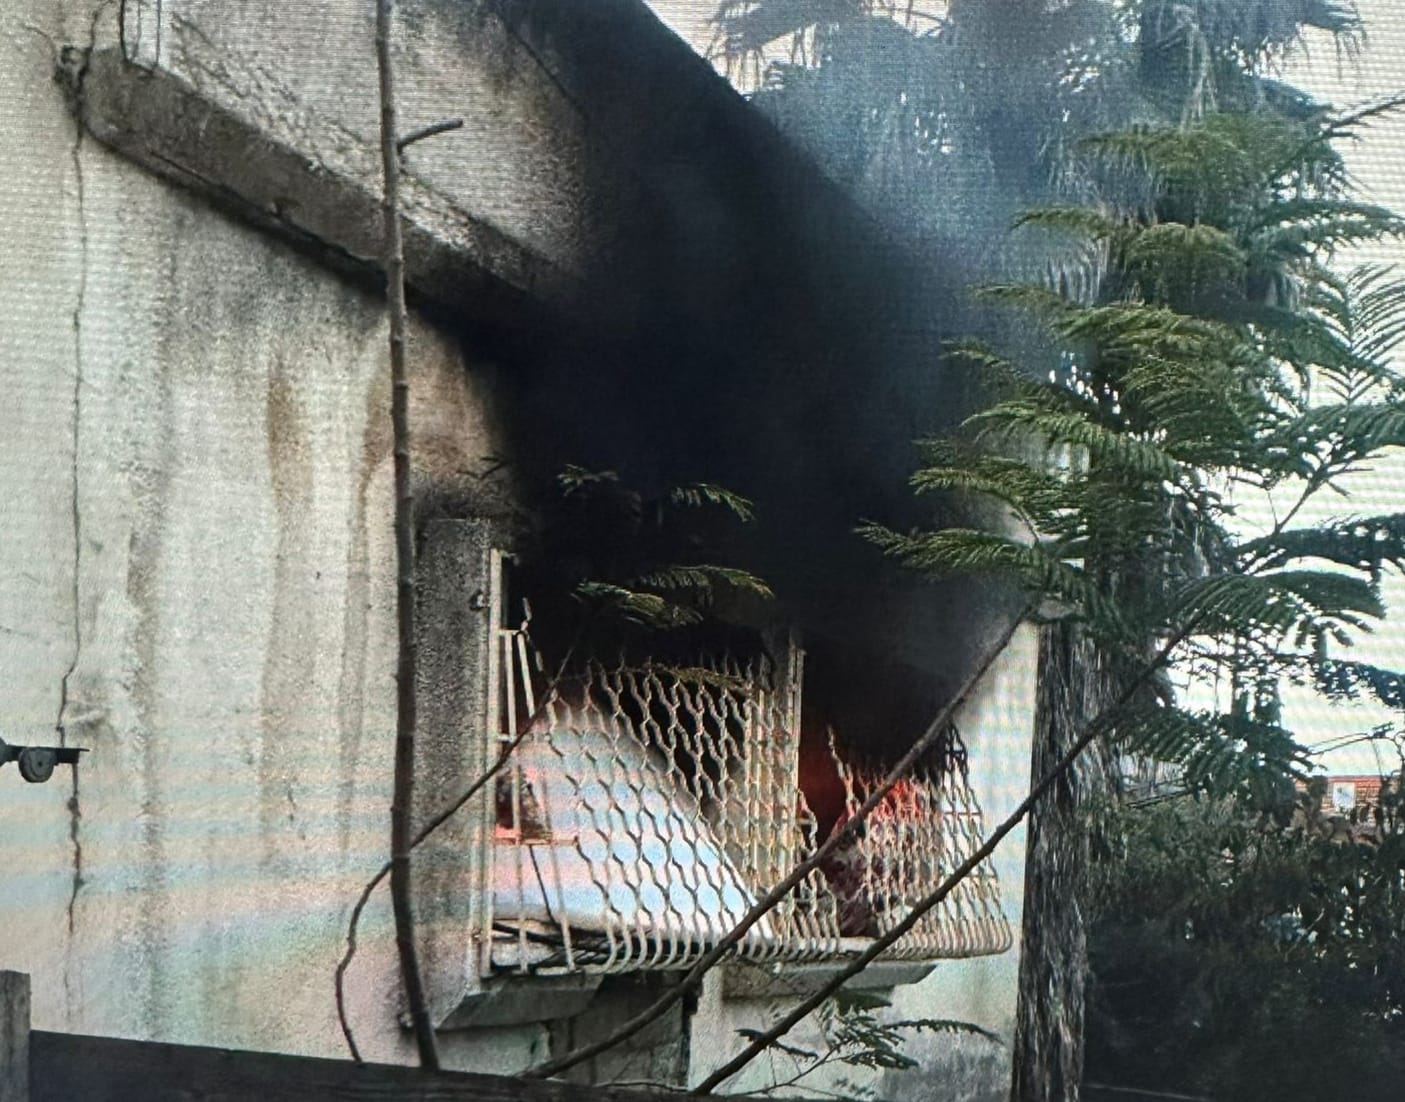  اللد: حريق داخل منزل دون وقوع اصابات